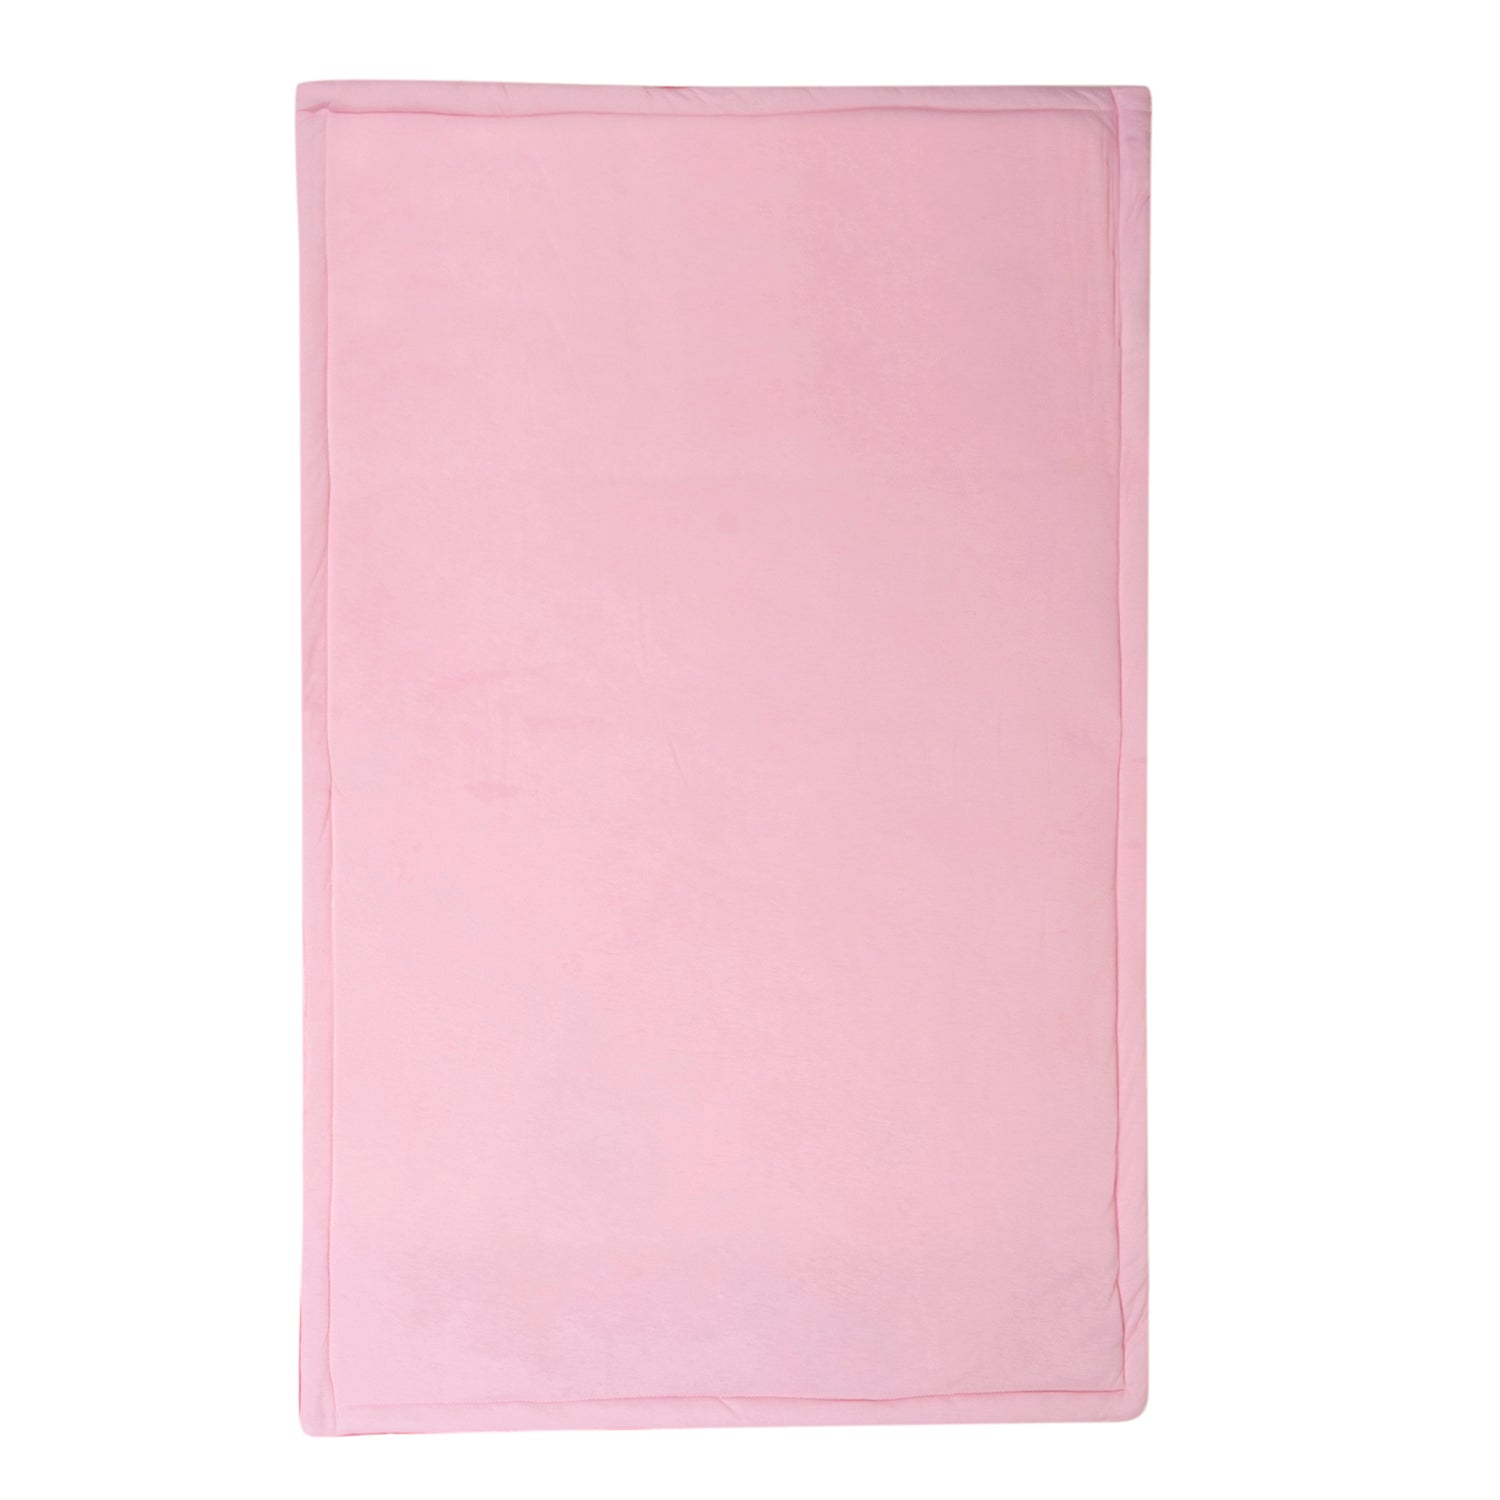 Baby Moo Bunny Plush Cotton All Season Nursery Blanket - Pink